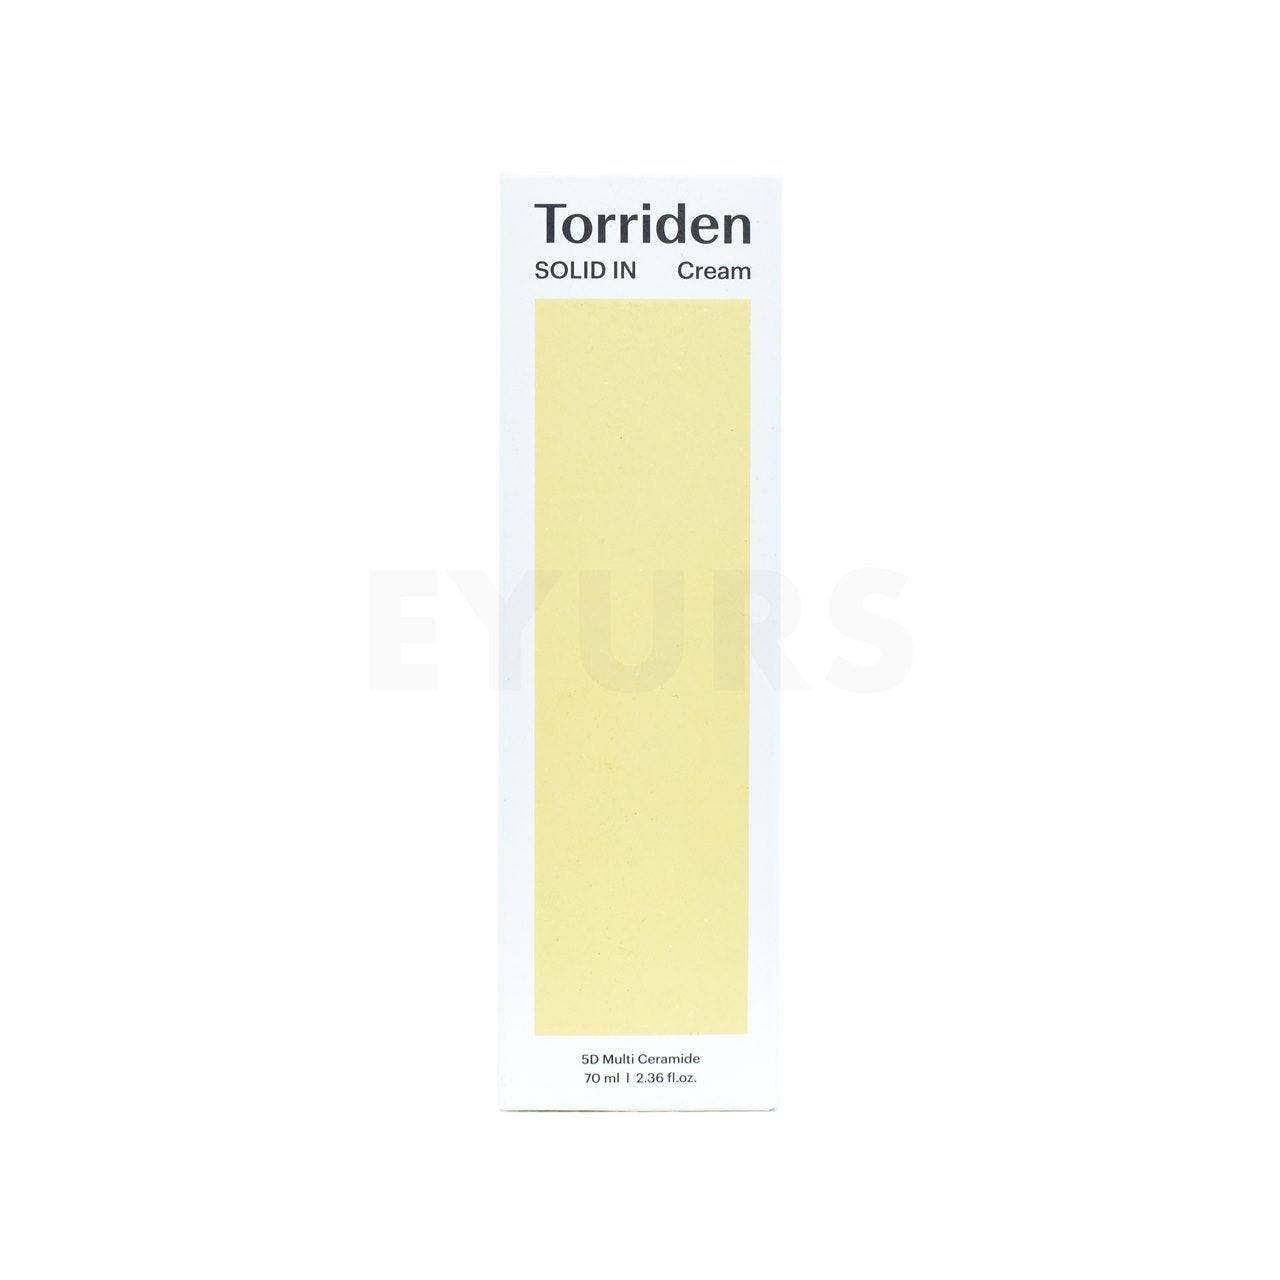 torriden solid in ceramide cream front side packaging box